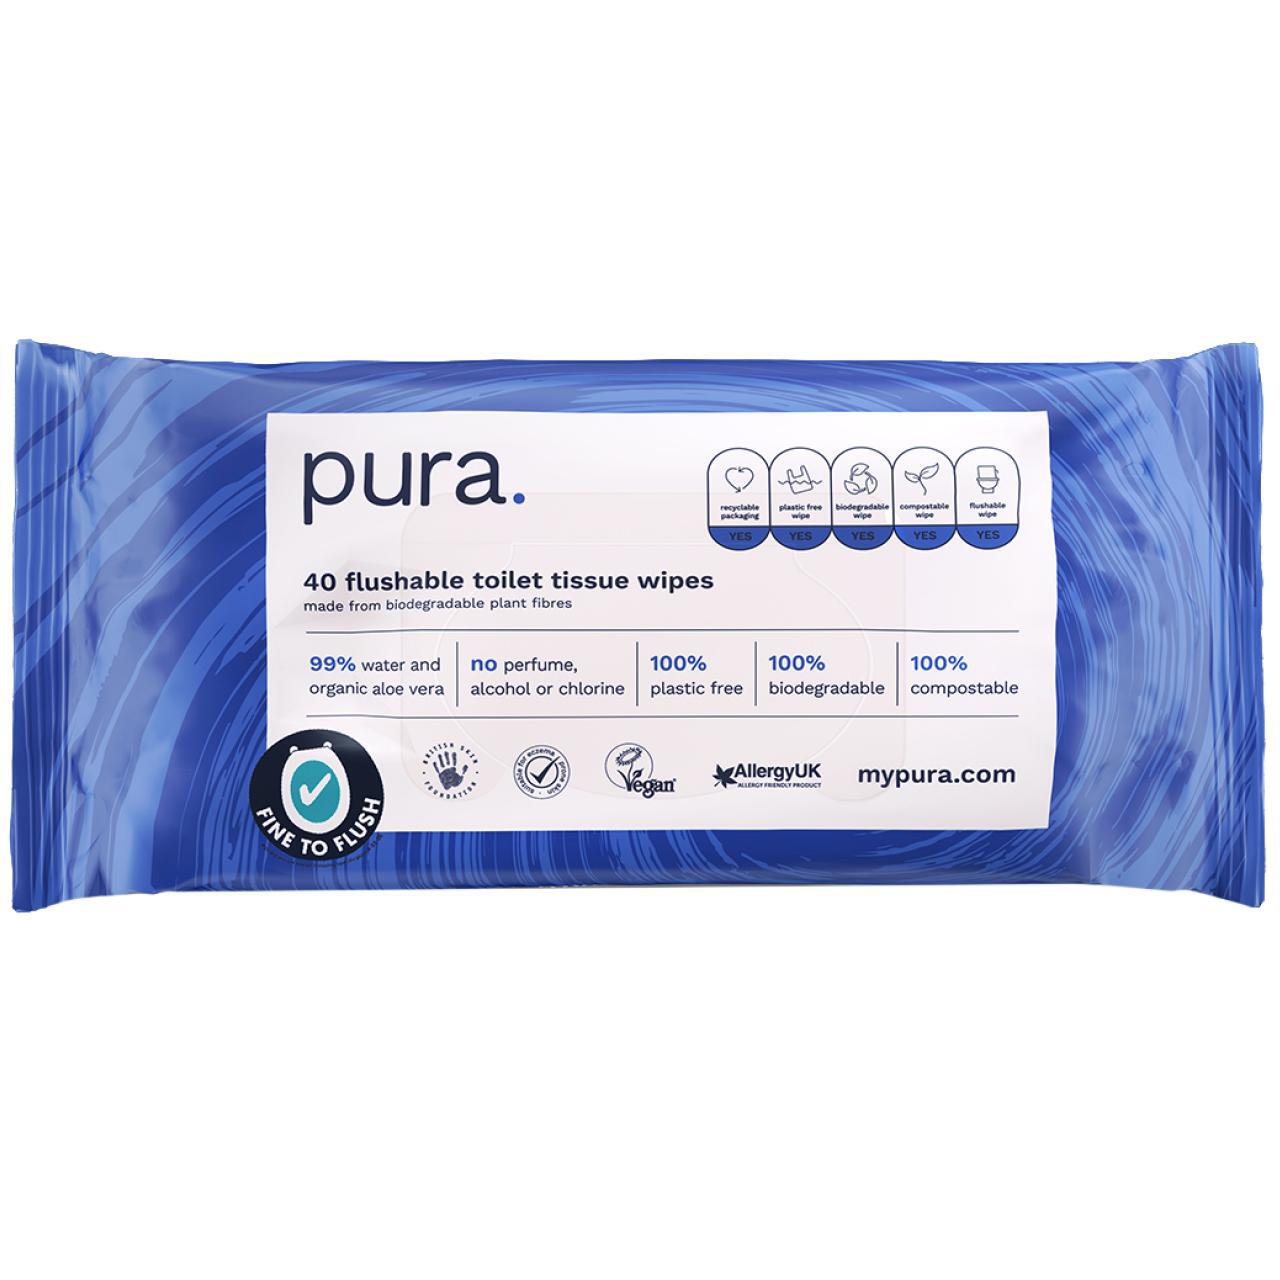 Pura 100% Plastic free, biodegradable flushable toilet wipes (40 wipe pack) 40 per pack